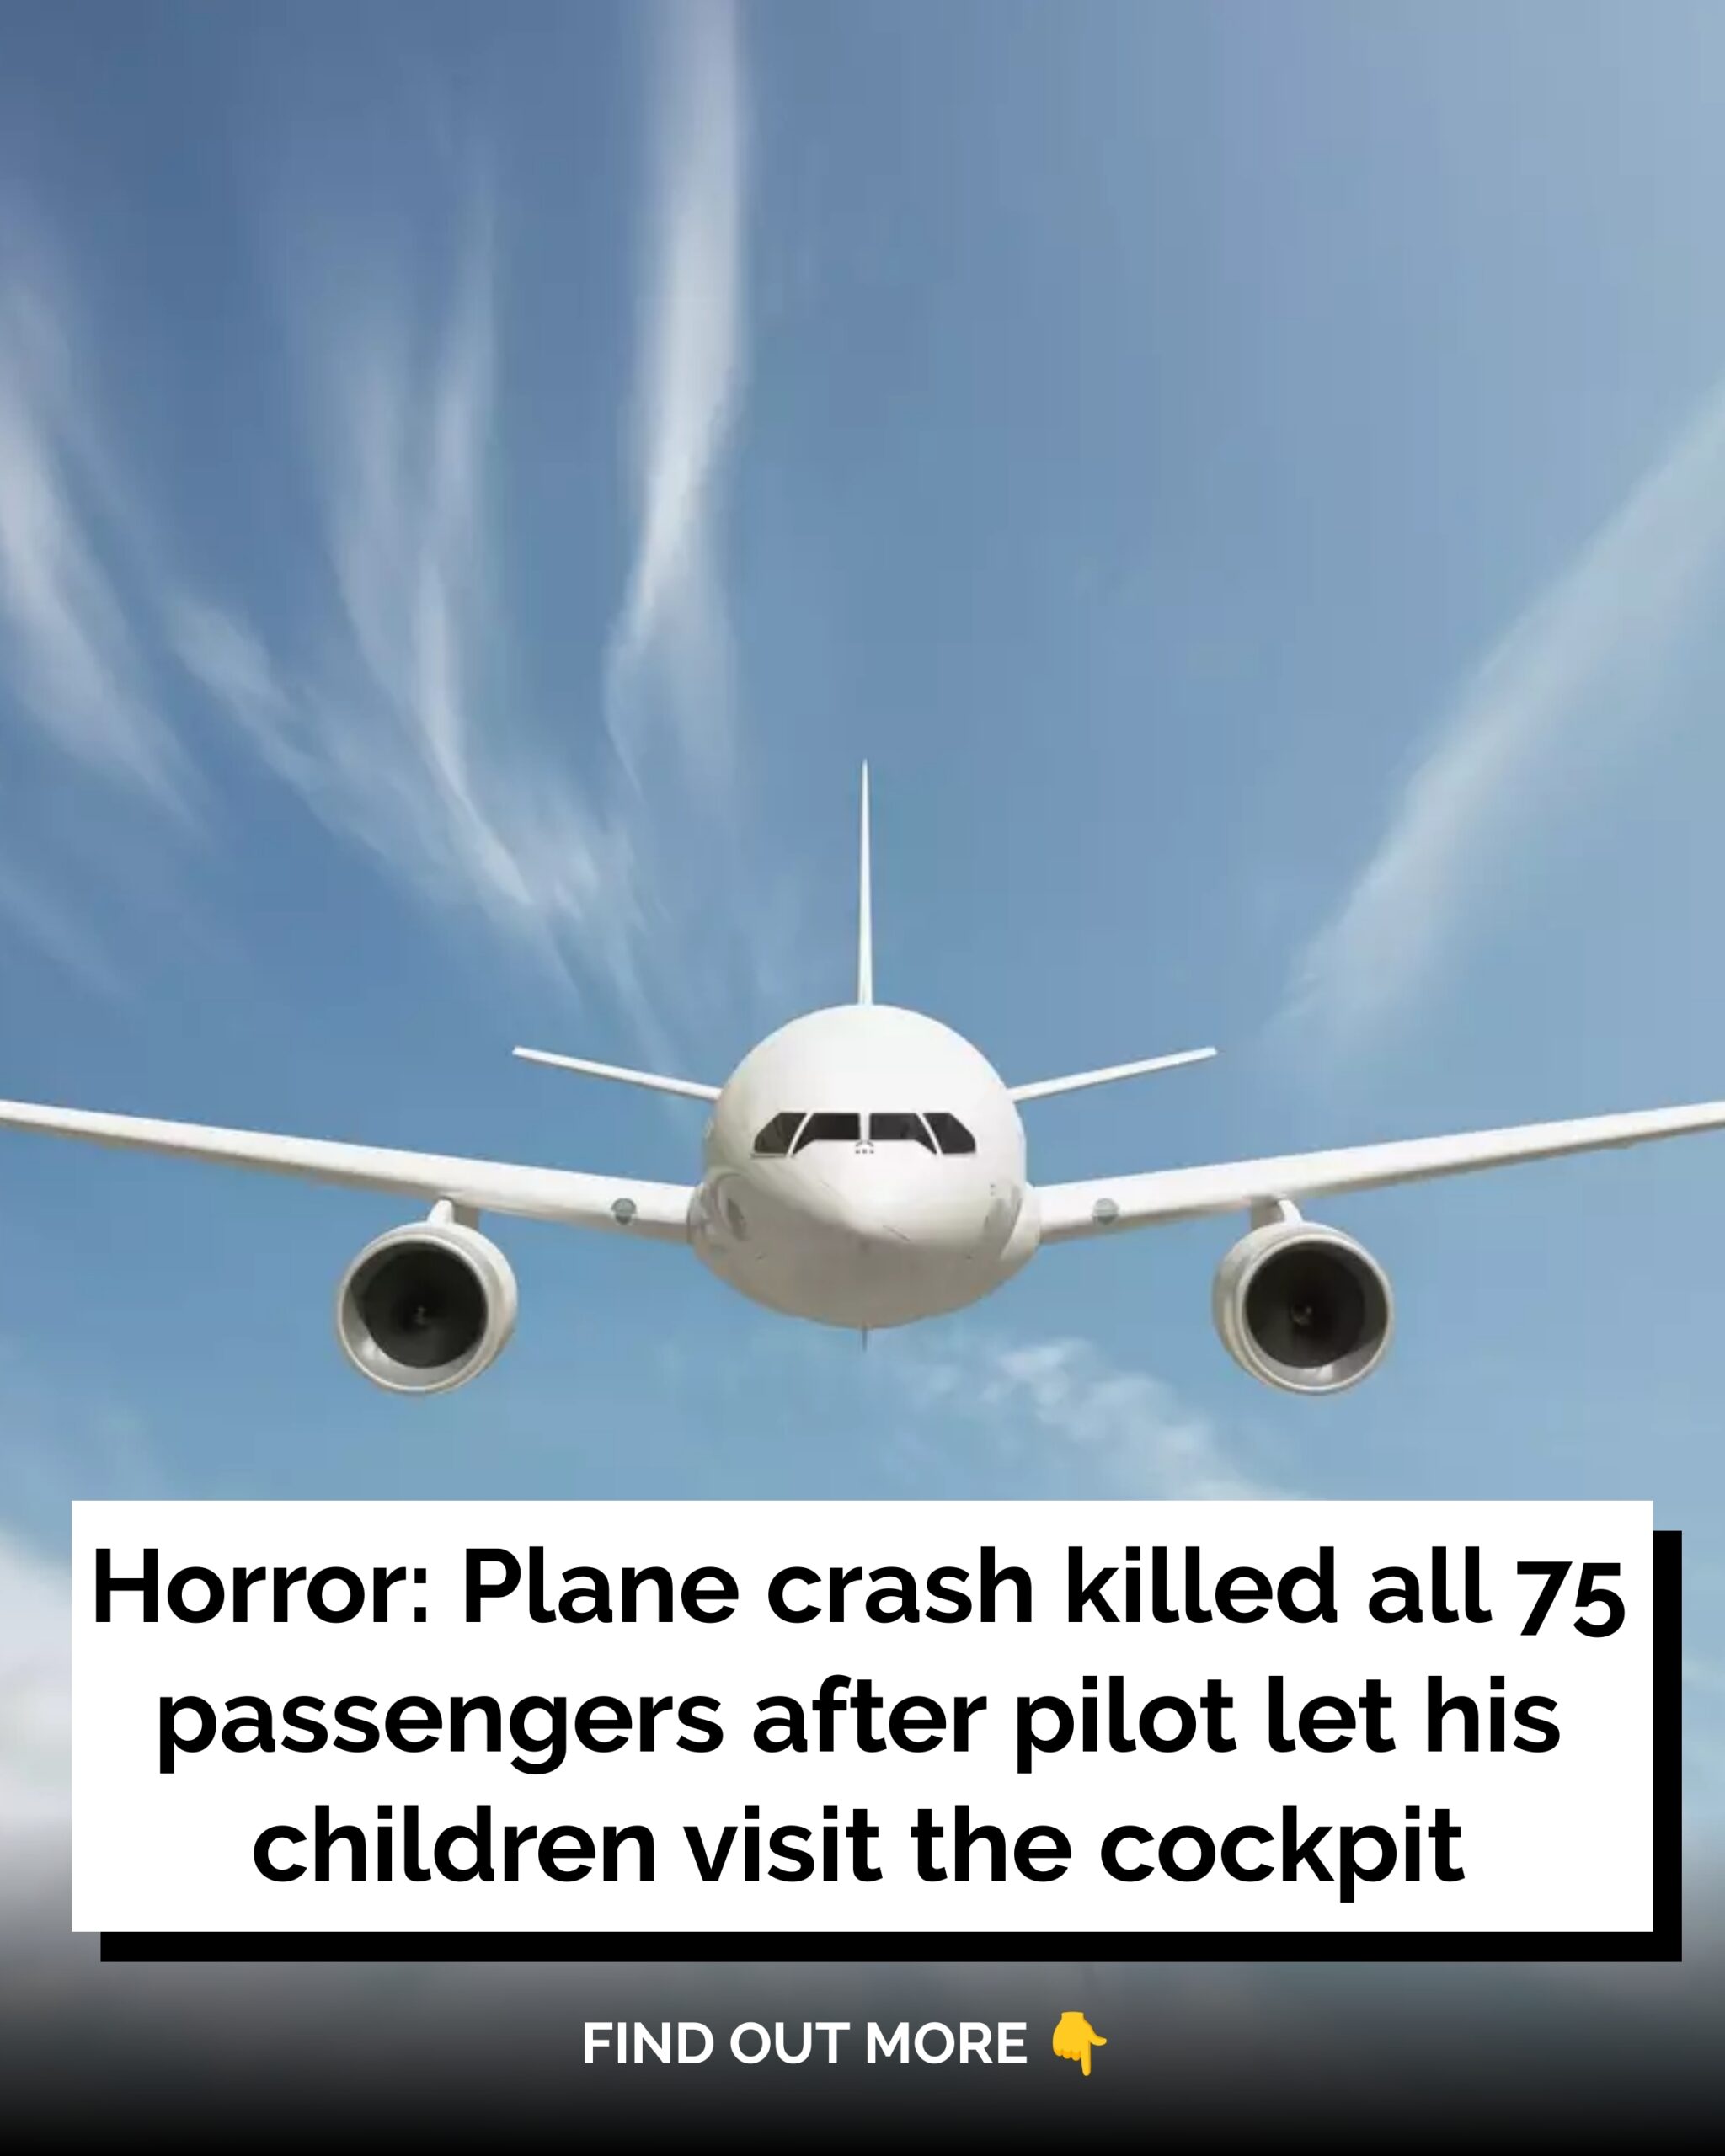 Horror plane crash killed all 75 passengers after pilot let his children visit the cockpit